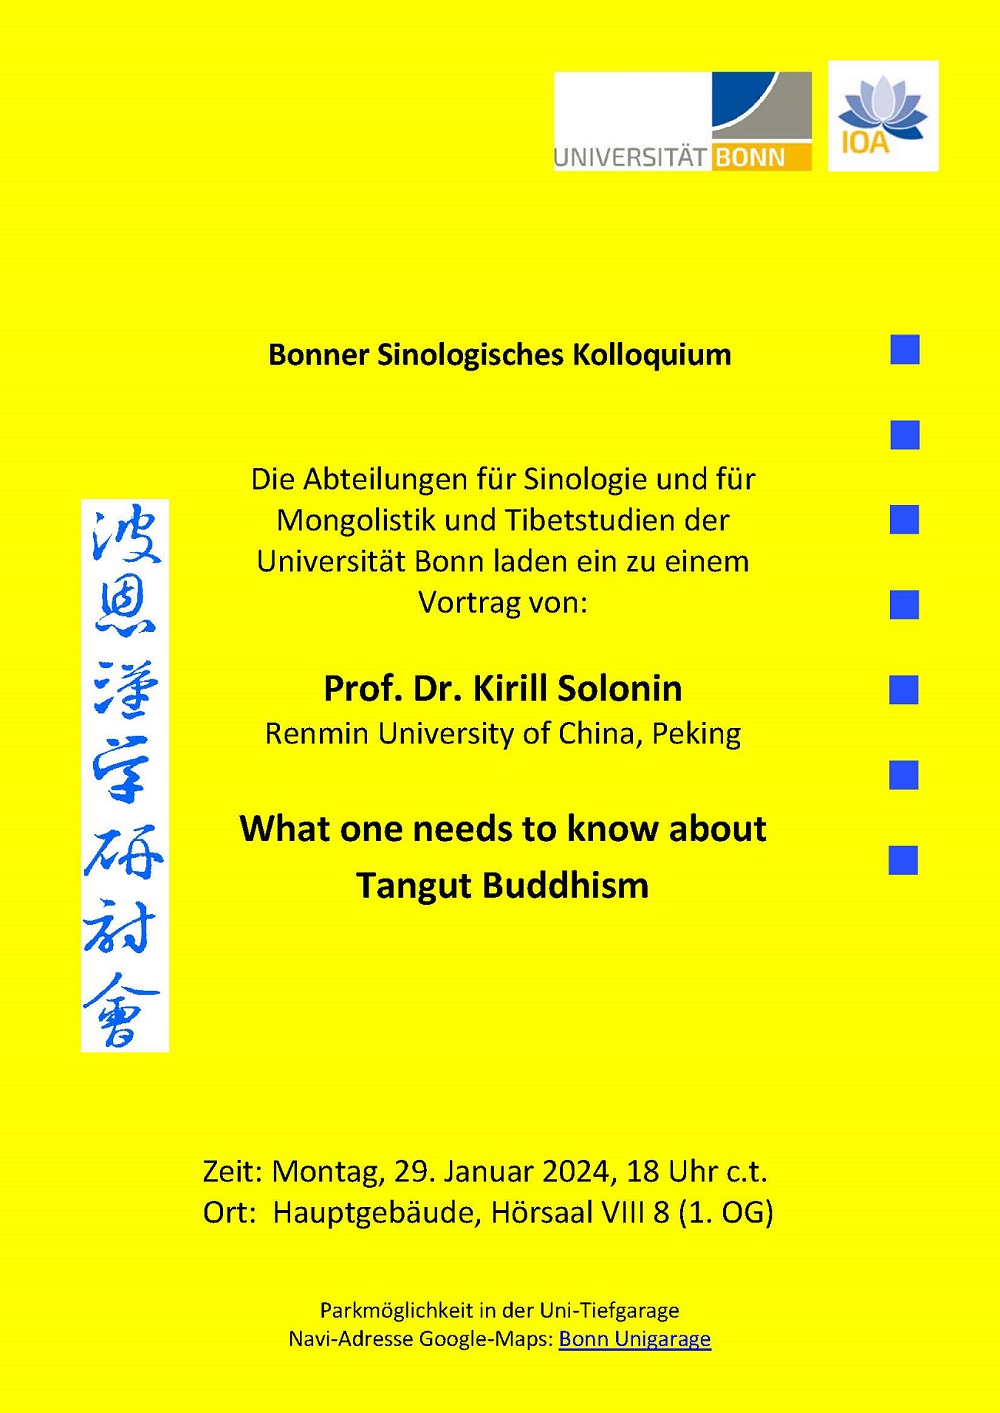 29.01.2024 Sinologisches Kolloquium - Vortrag Prof. Dr. Kirill Solonin